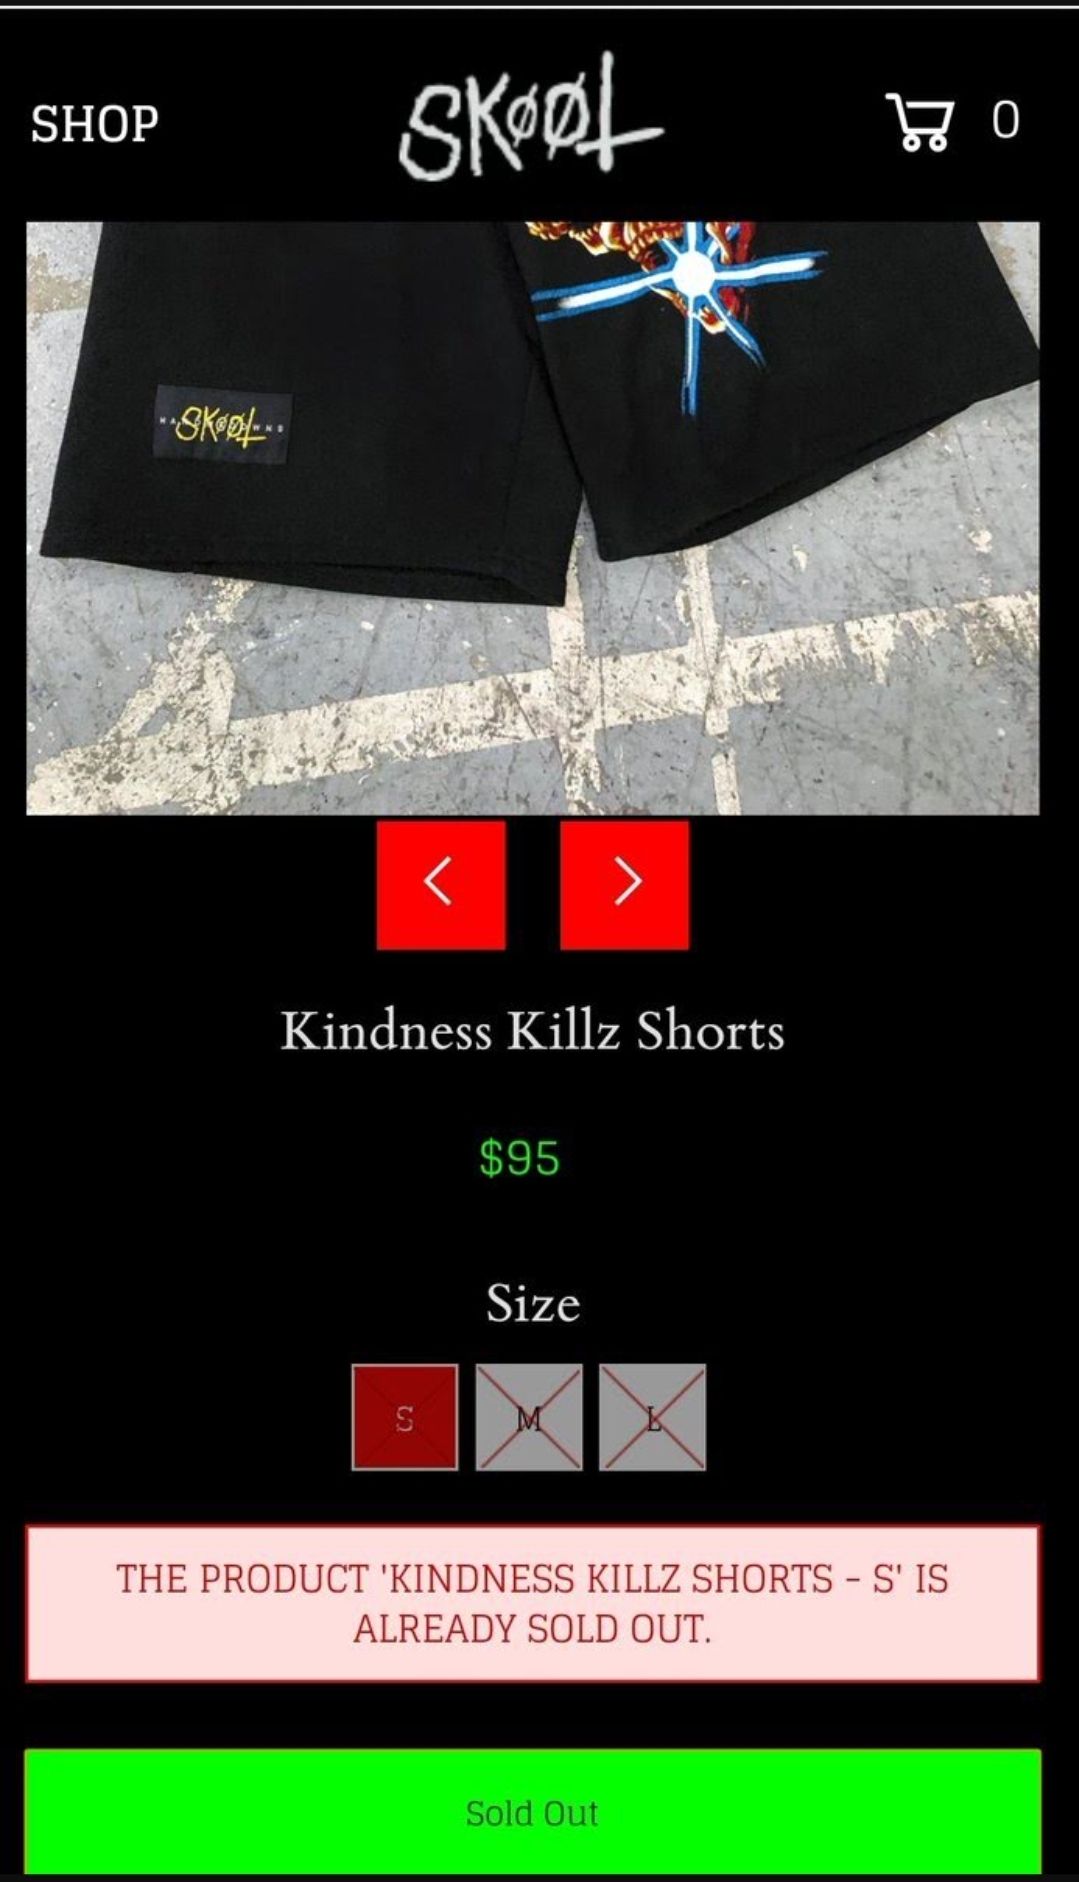 Celana Kindness Killz yang laris manis digunakan Jungkook BTS.